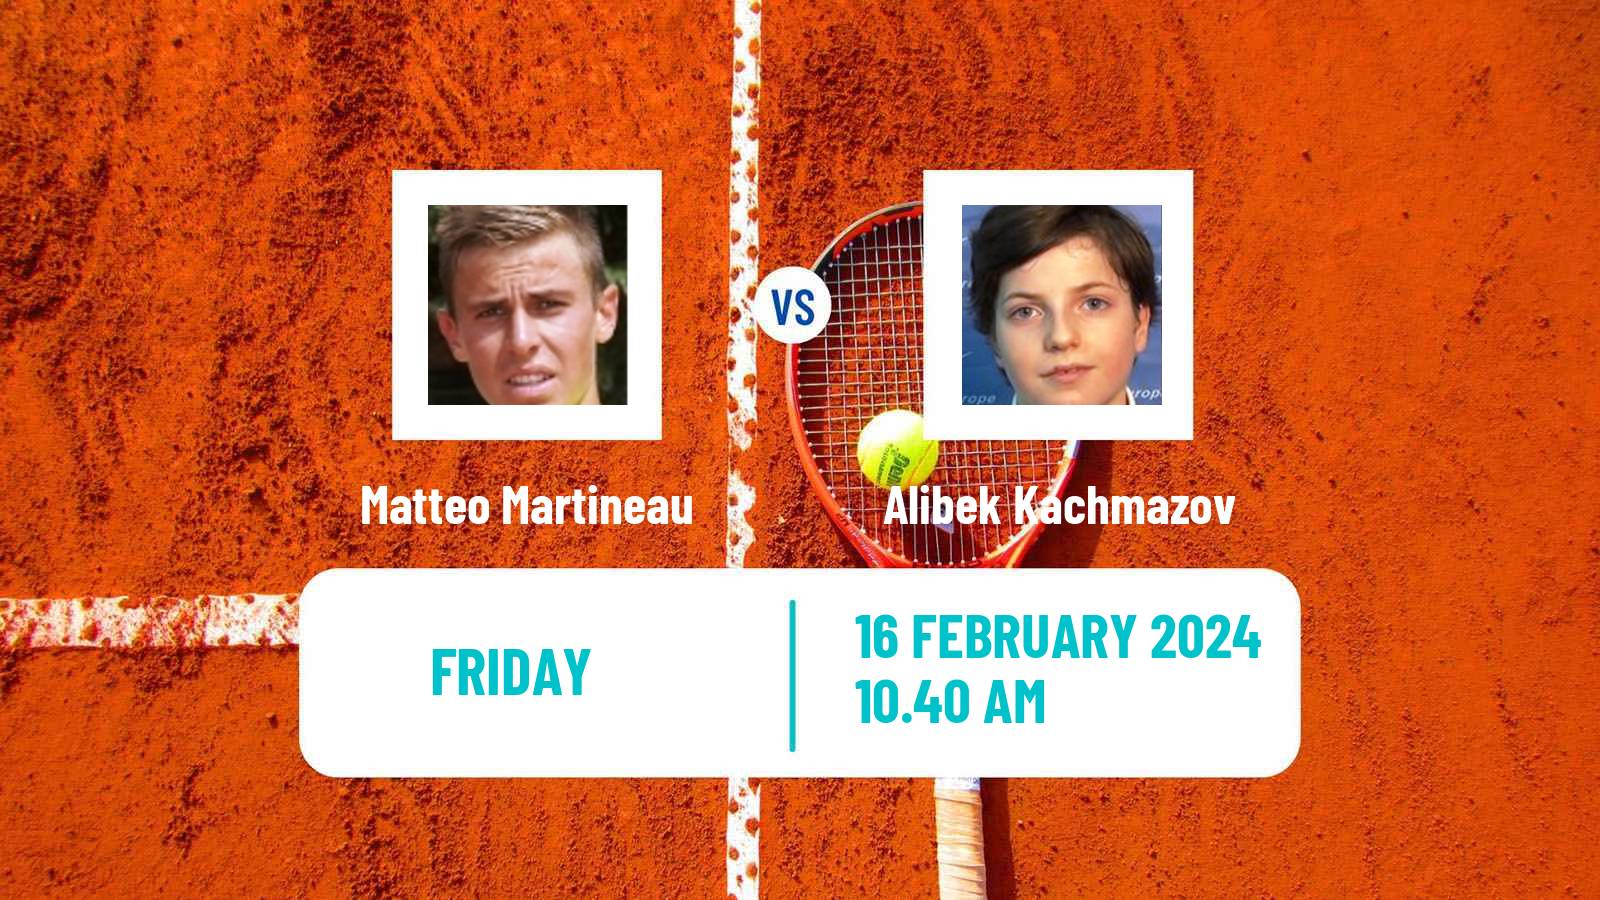 Tennis Cherbourg Challenger Men Matteo Martineau - Alibek Kachmazov